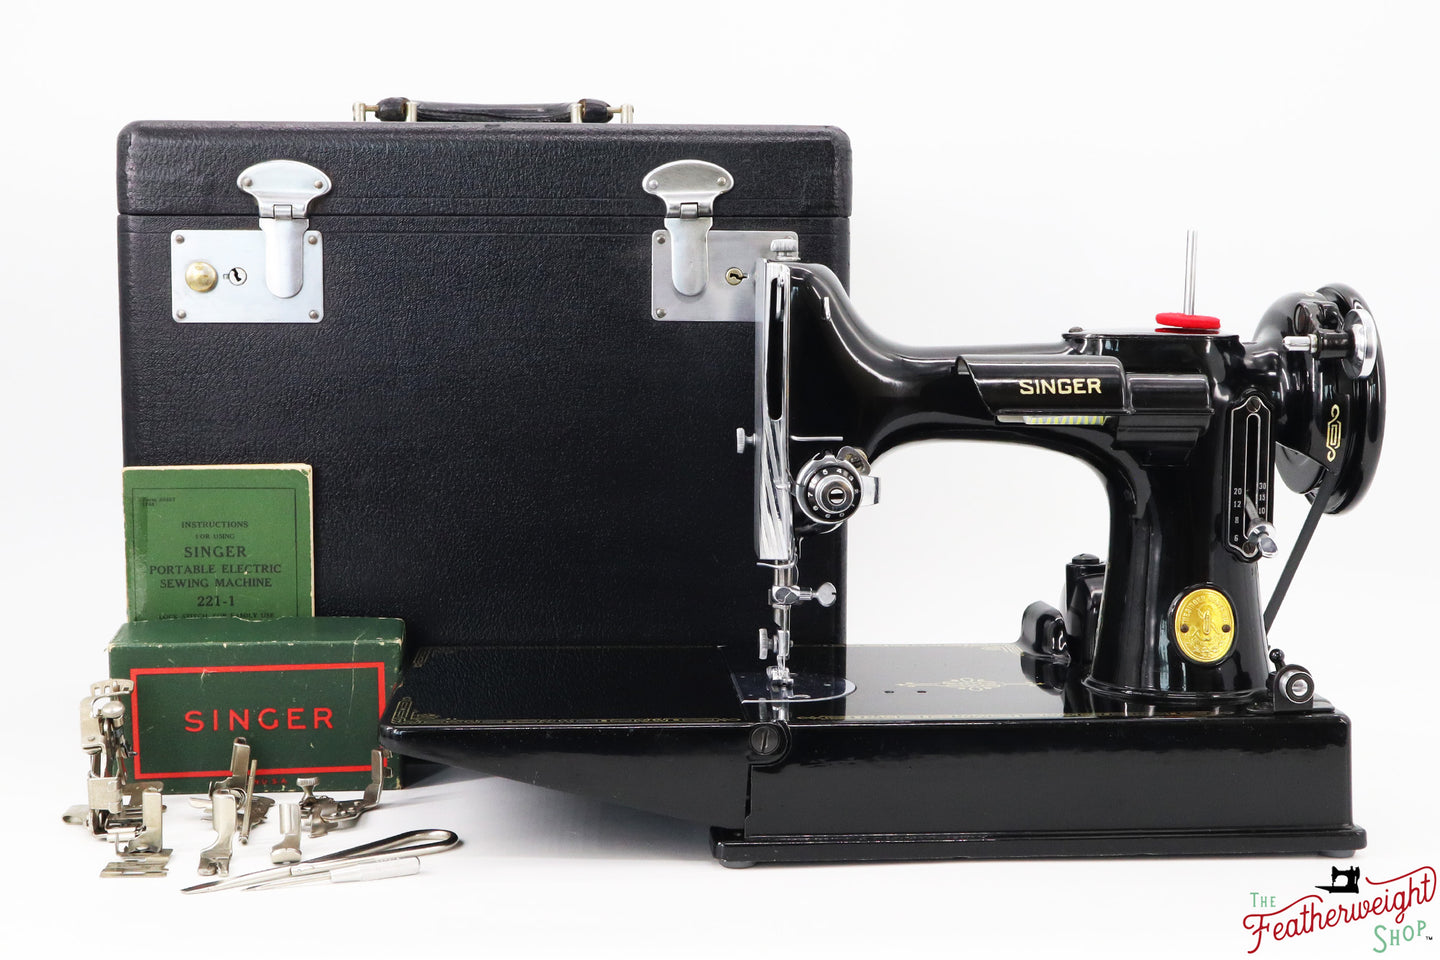 Singer Featherweight 221 Sewing Machine, AJ001*** - 1948